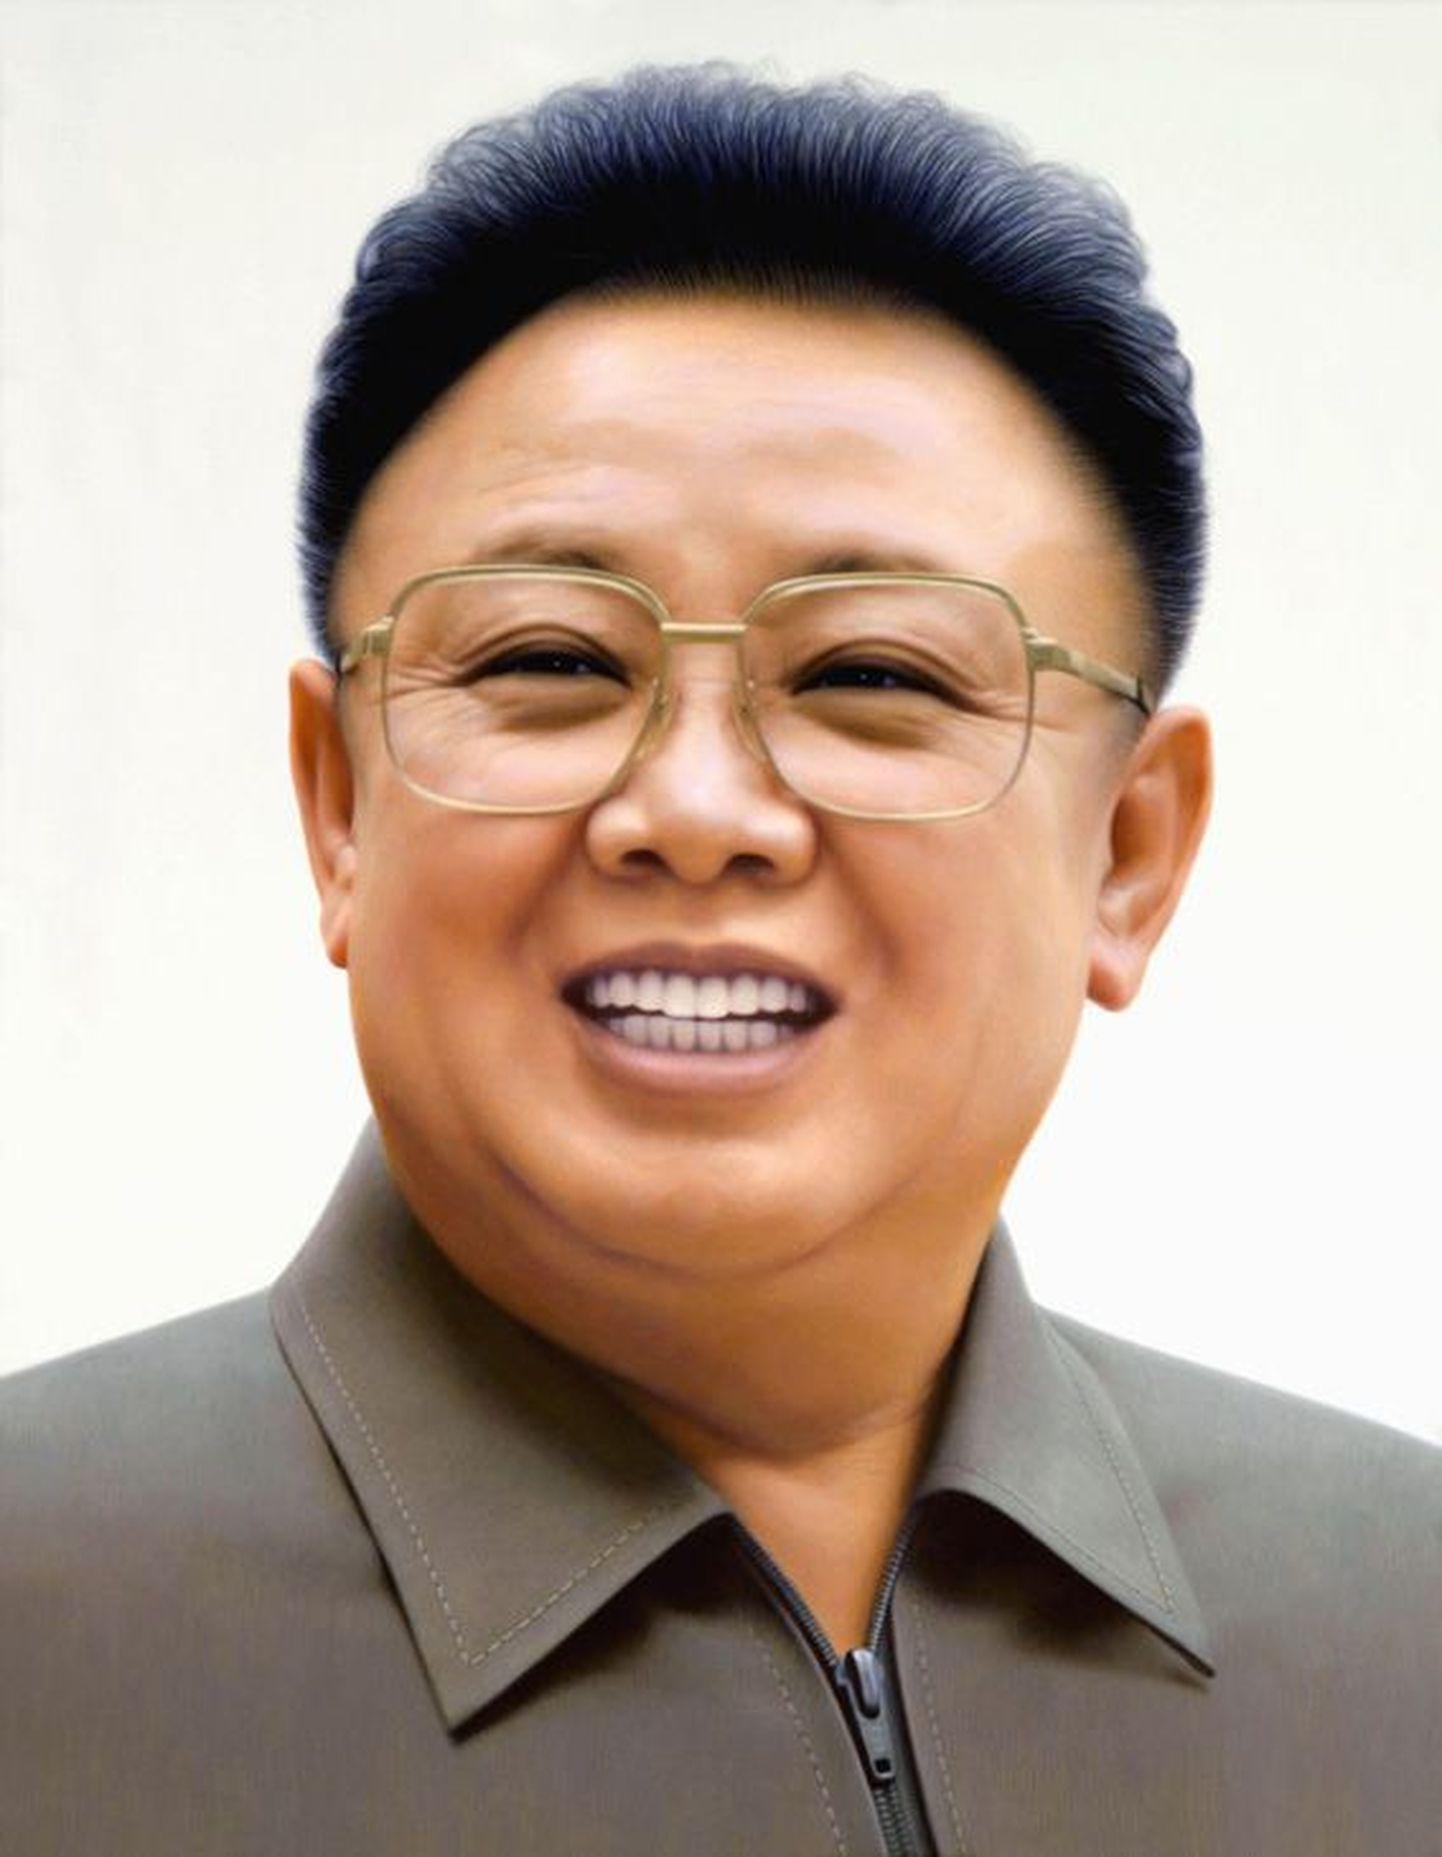 Kim Jong Il.